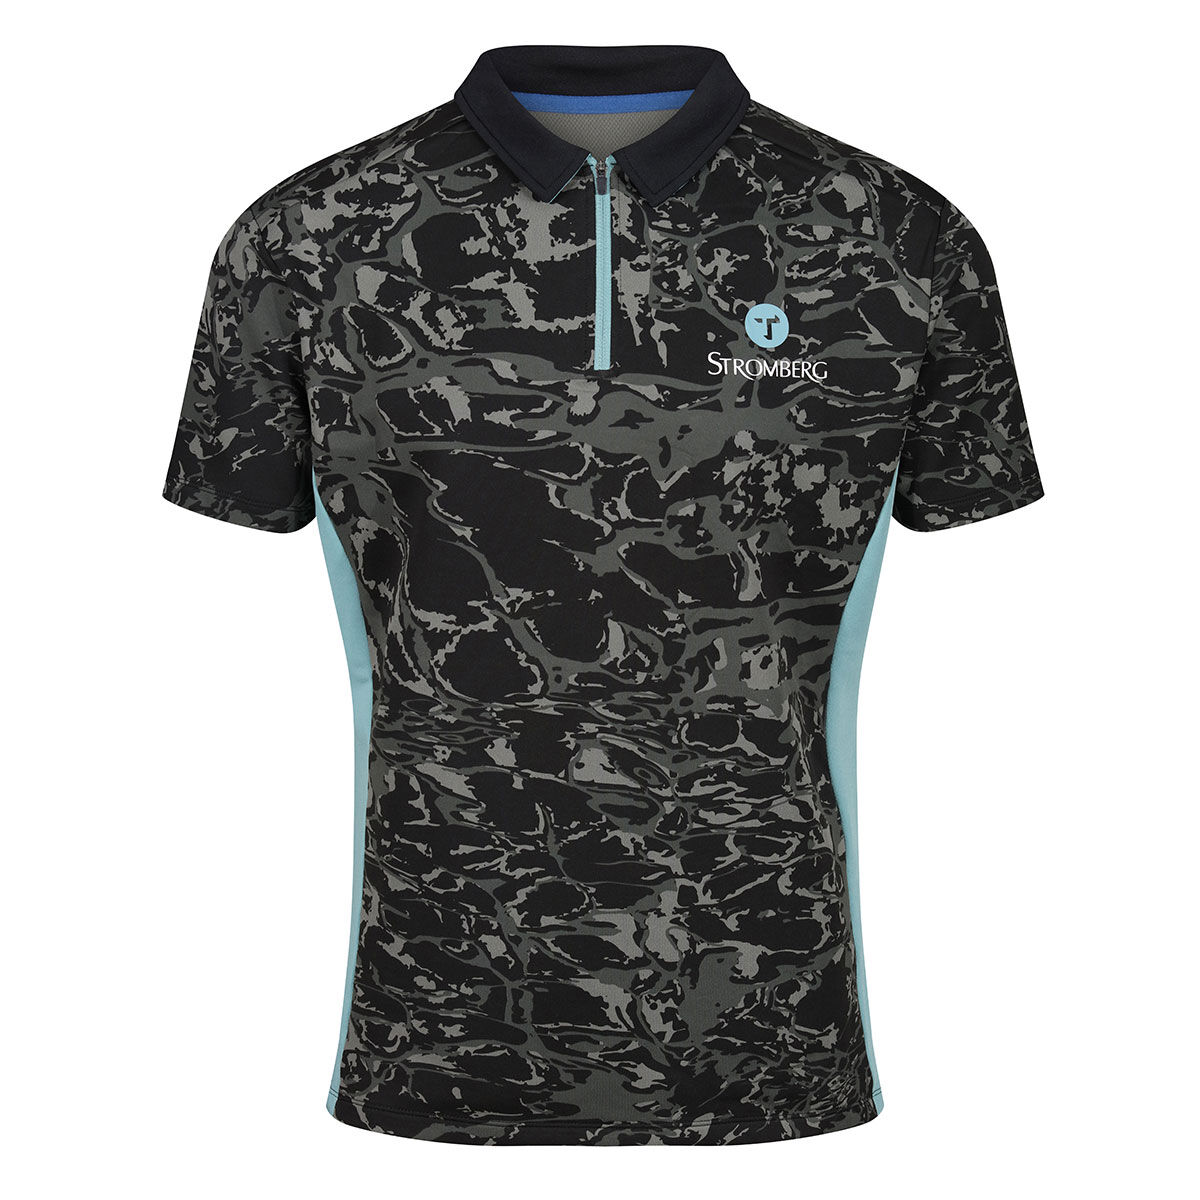 Ocean Tee Golf Polo Shirt, Mens Black and Grey Stylish Stromberg Print, Size: Small | American Golf von Ocean Tee